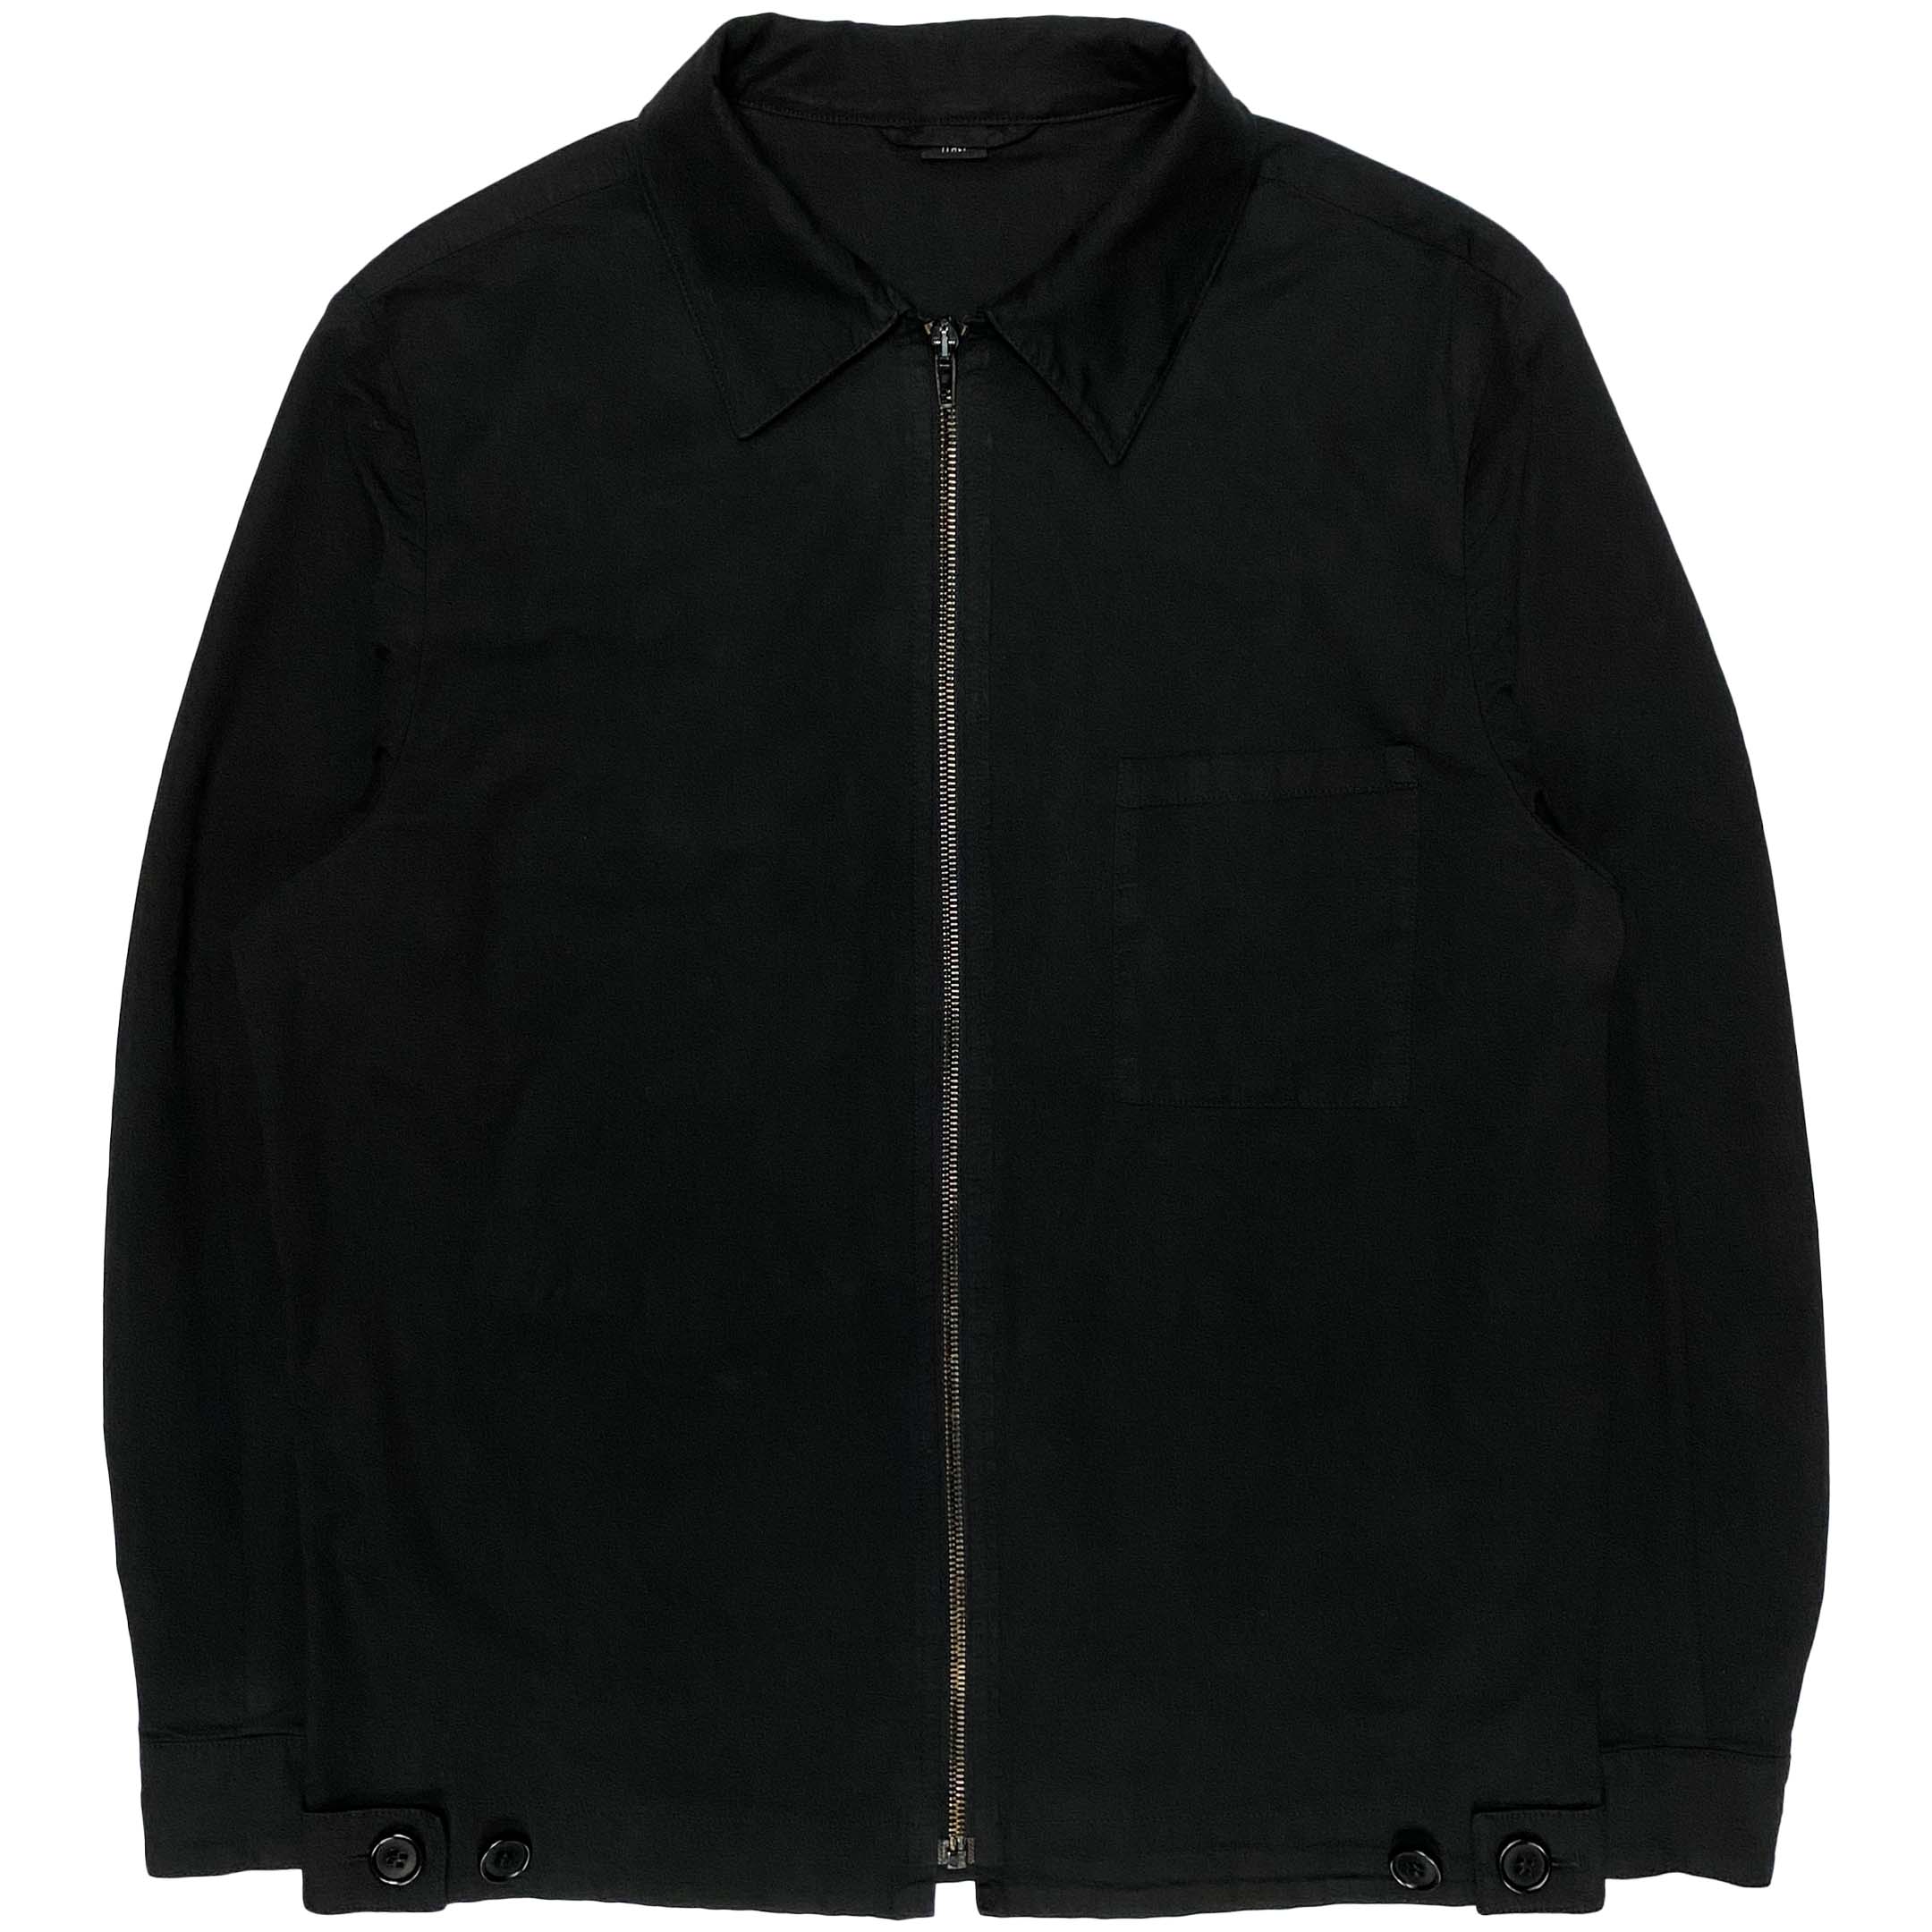 Helmut Lang, S/S 1996 Classic Zipped Jacket - La Nausée - fashion